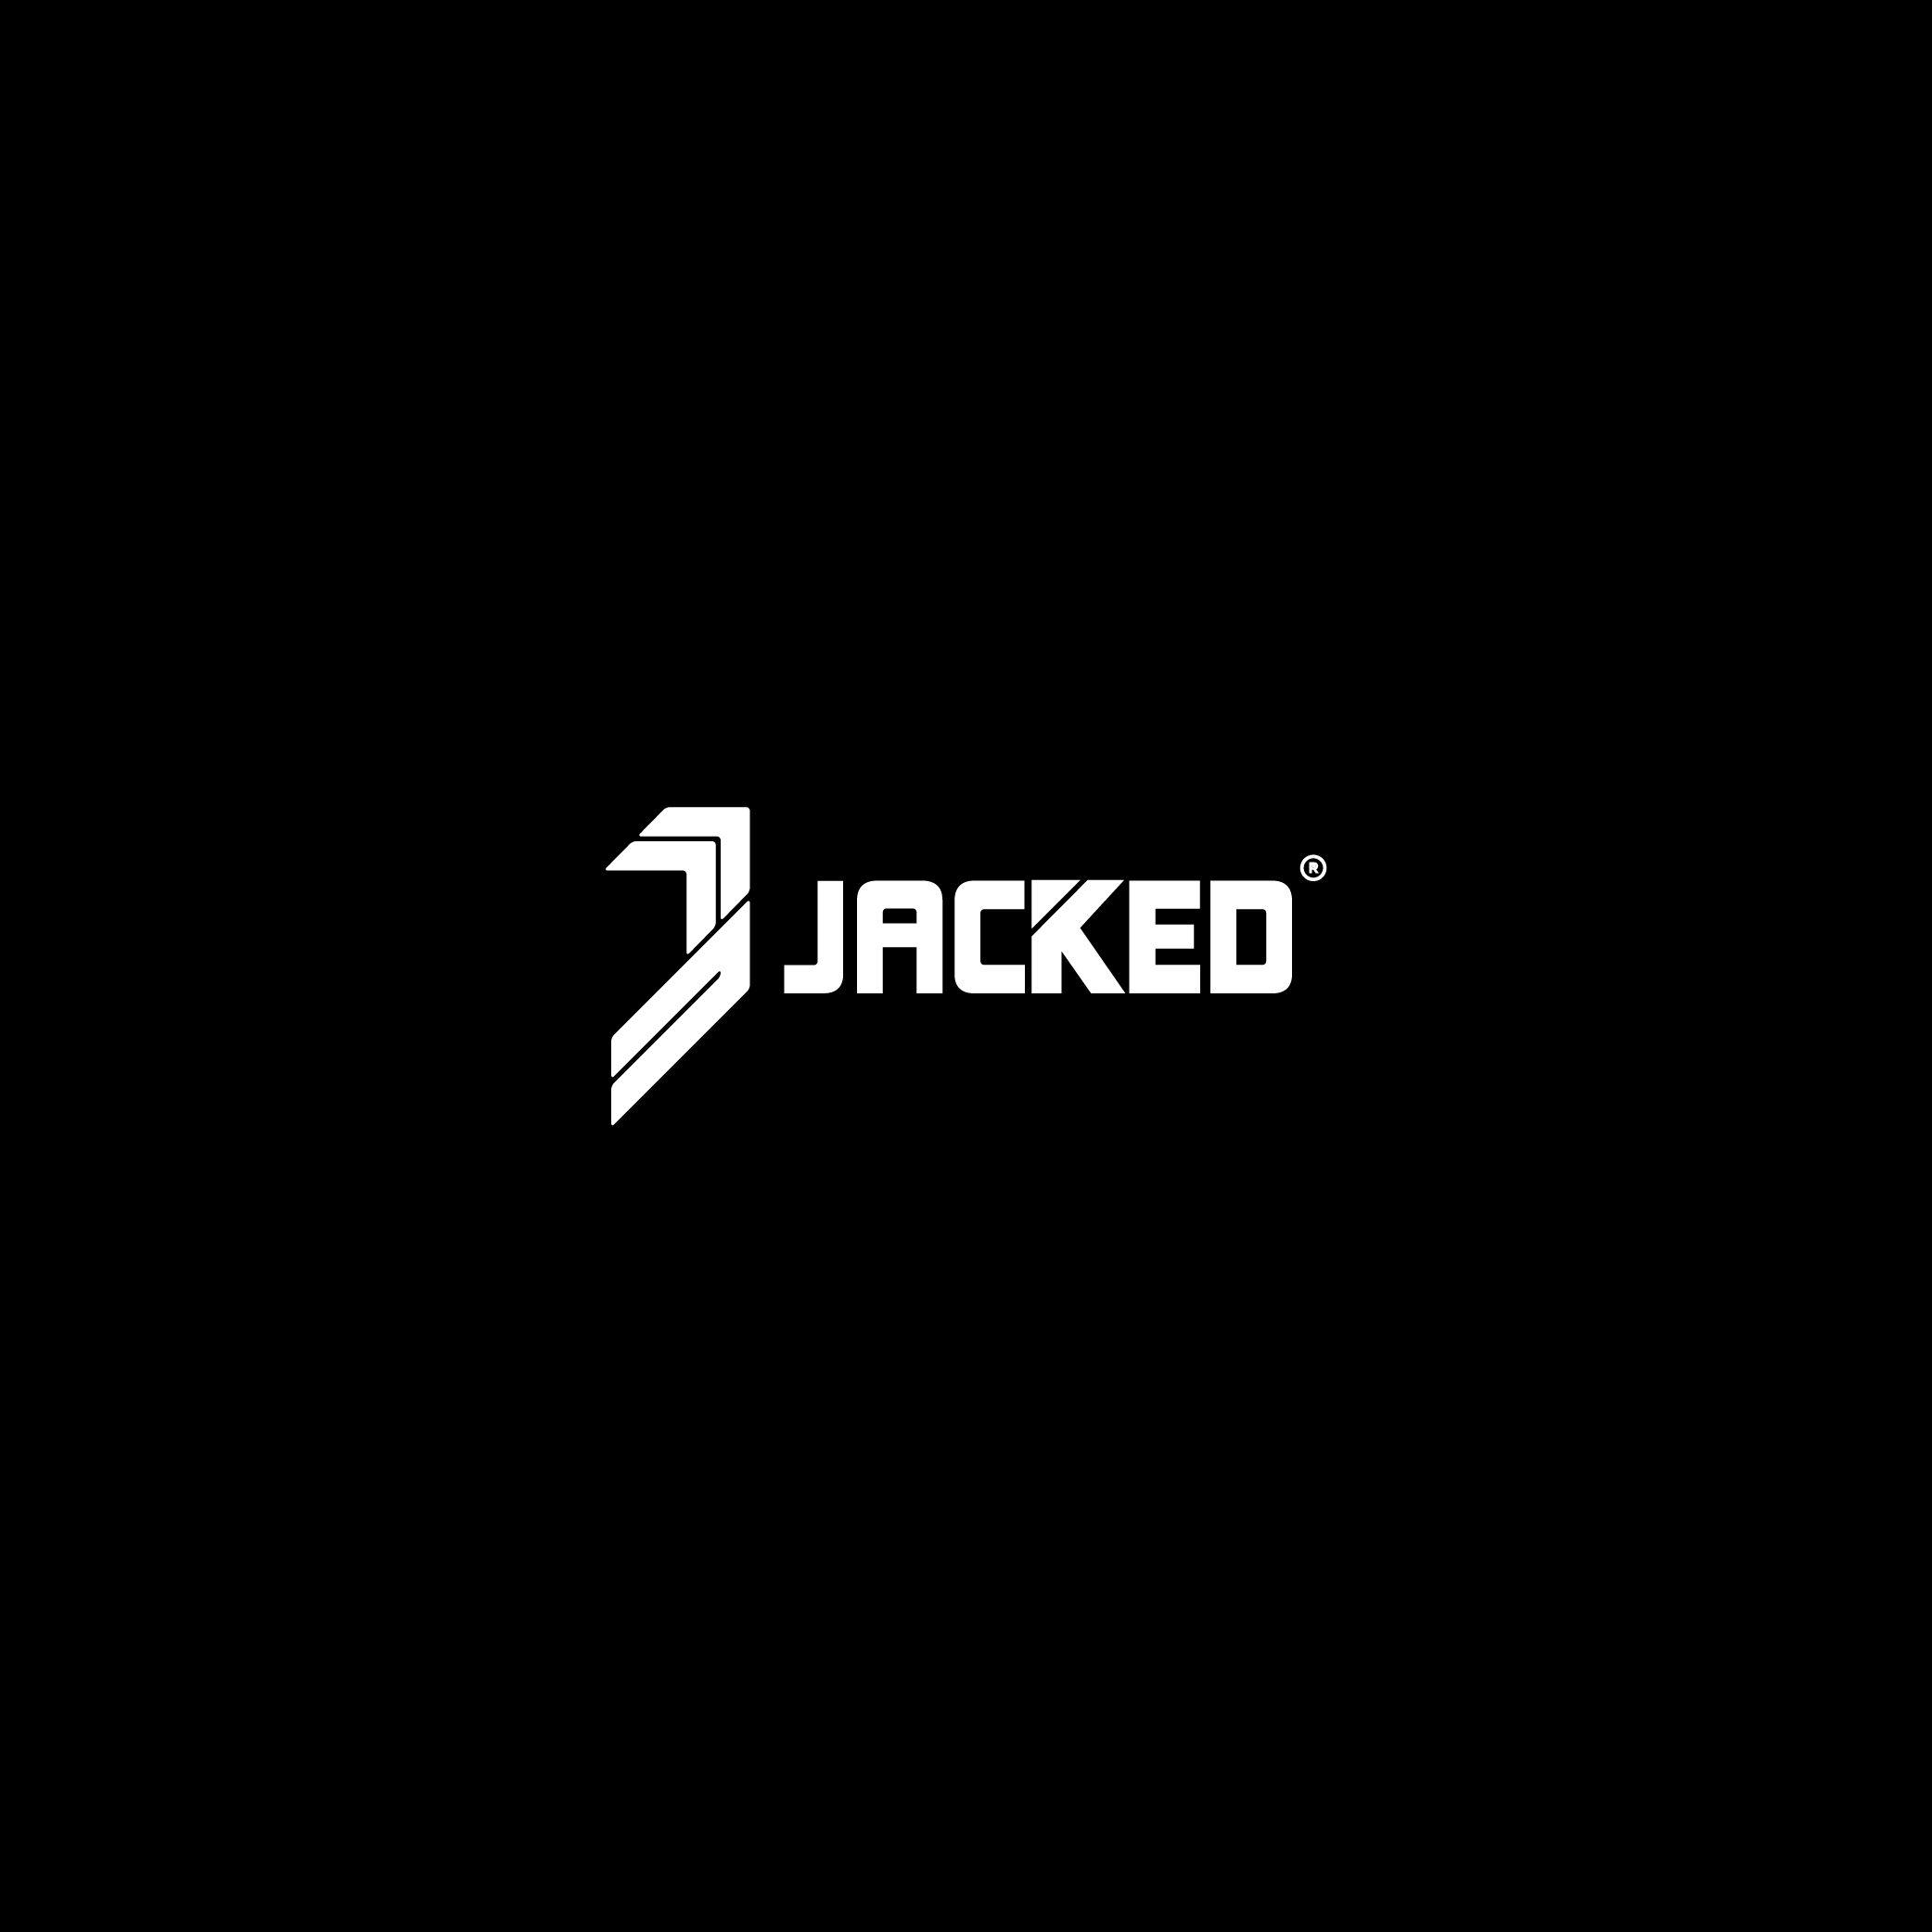 Supplement Company Logo - JACKED SUPPLEMENT COMPANY LOGO DESIGN